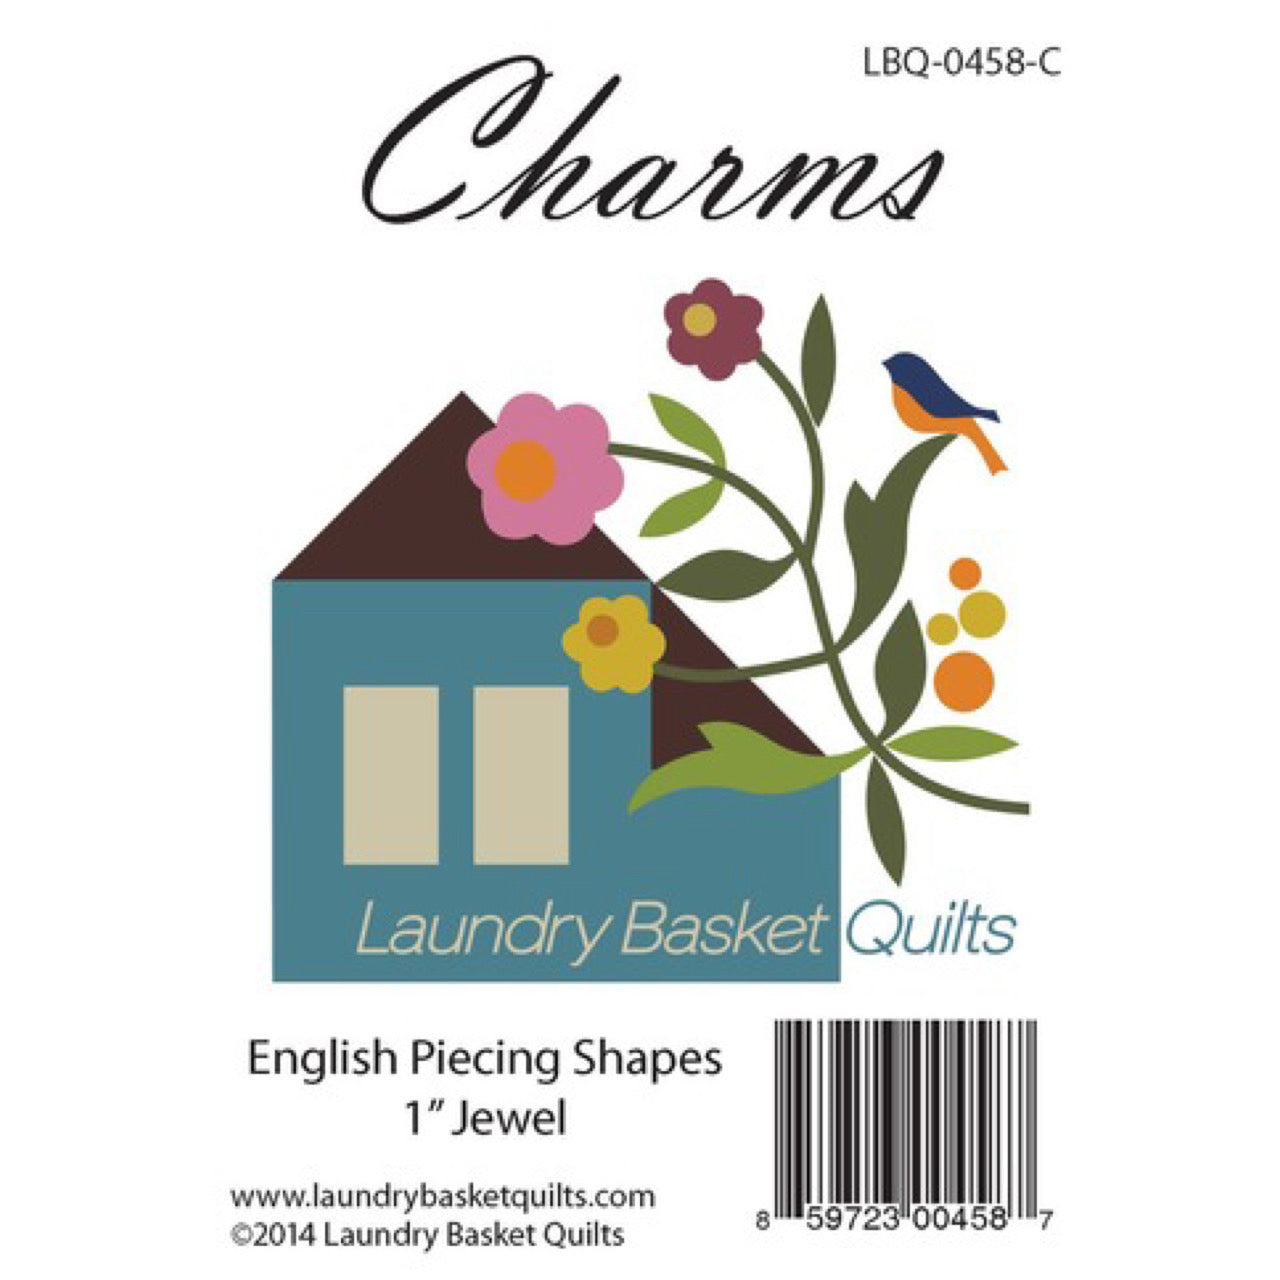 Charms - 1” Jewel